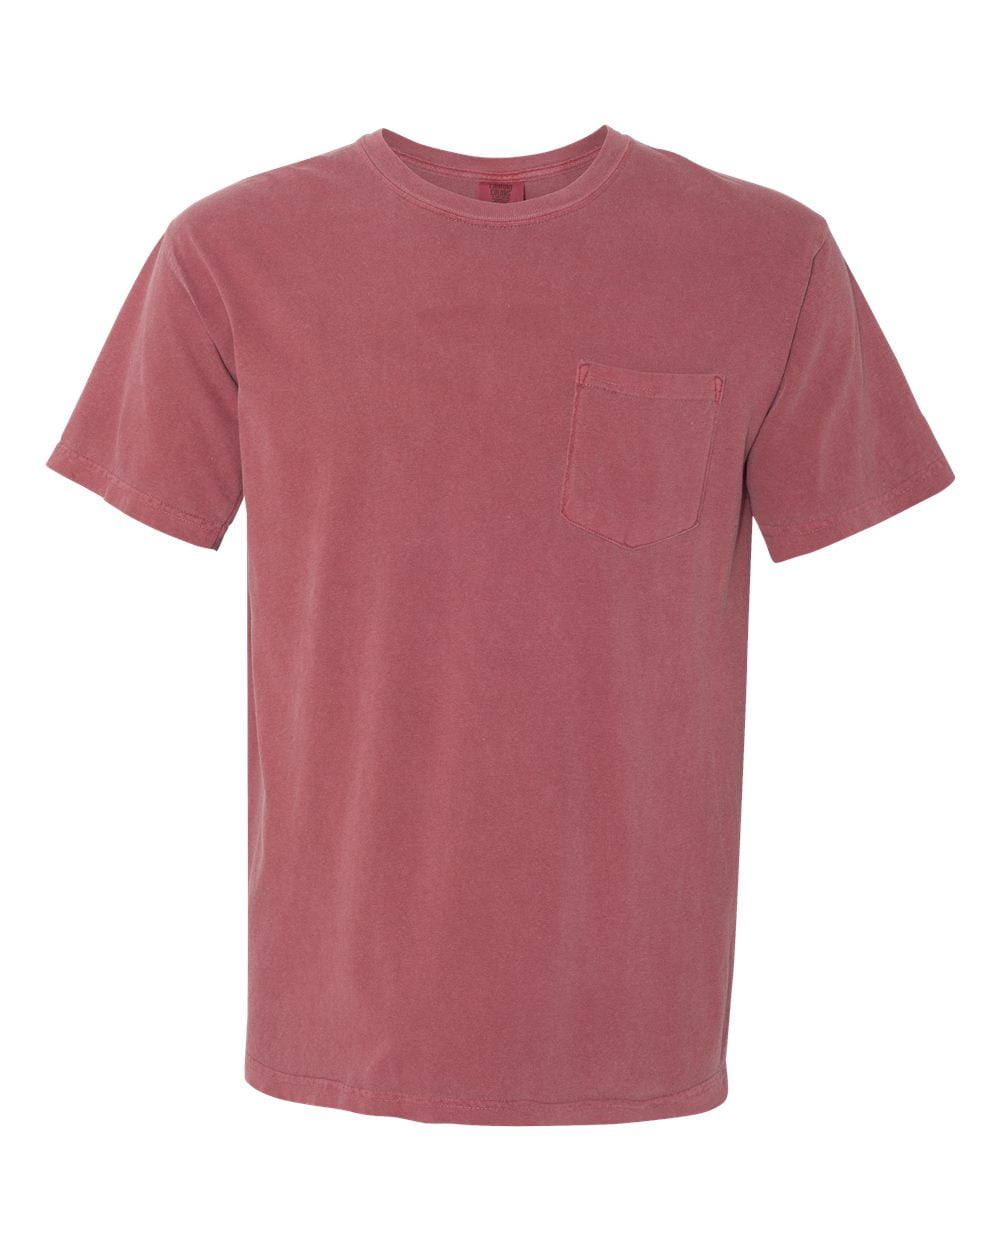 Neon Pink PgmDye Chouinard Adult Garment-Dyed Tank Top